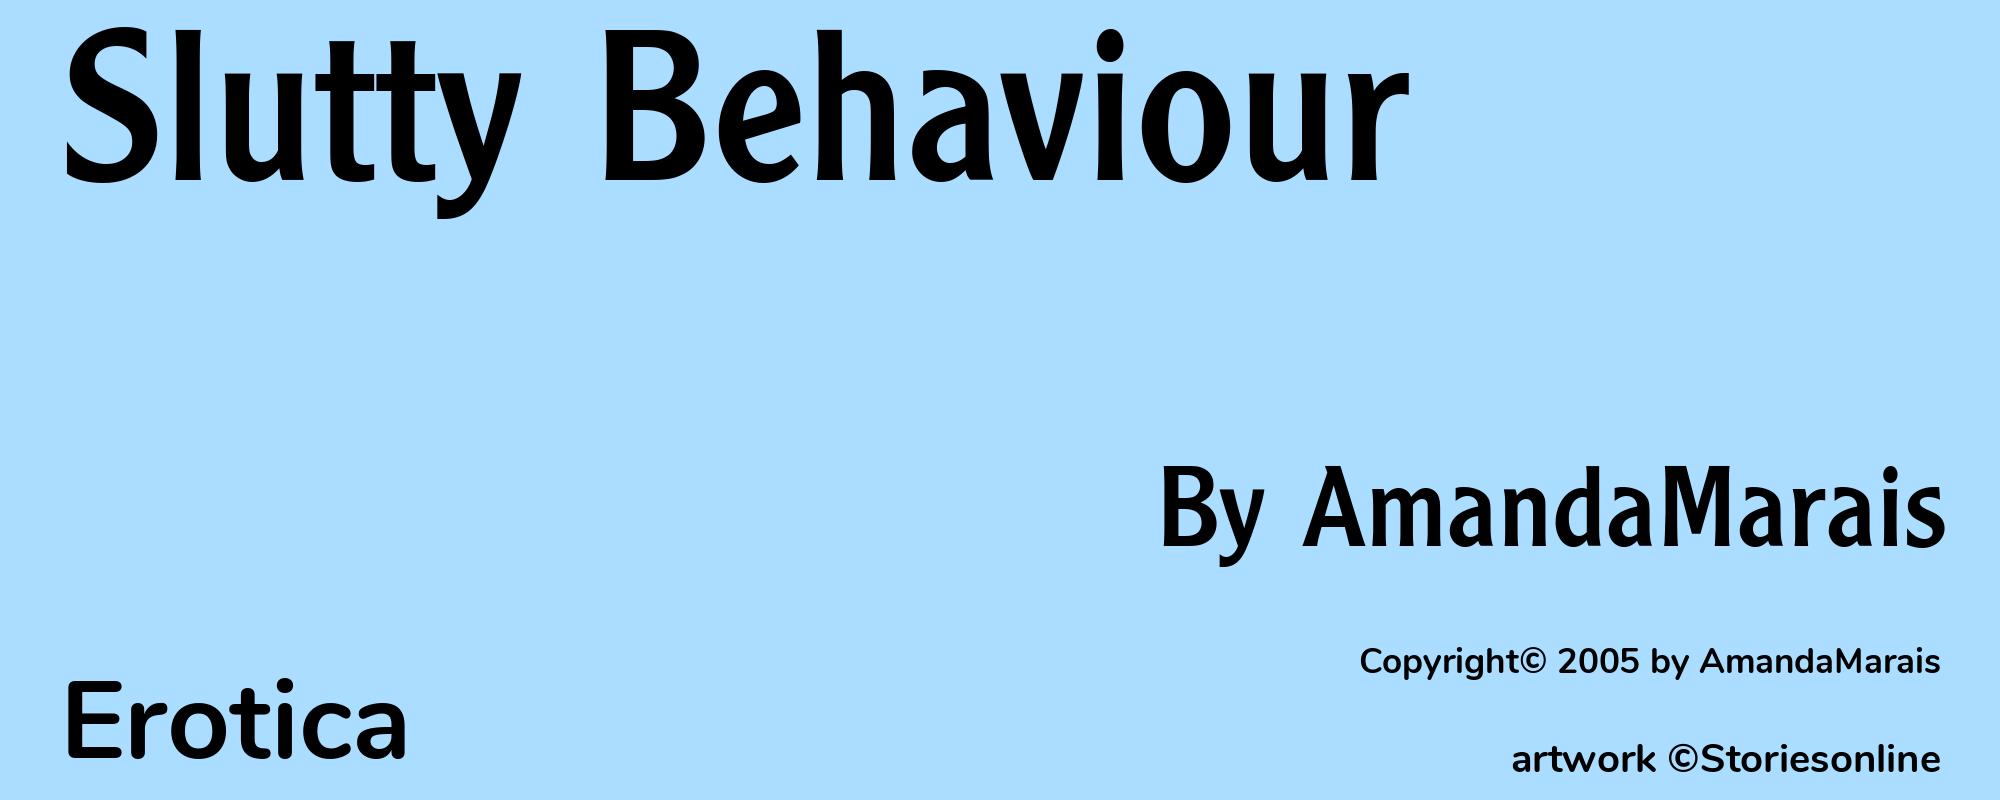 Slutty Behaviour - Cover